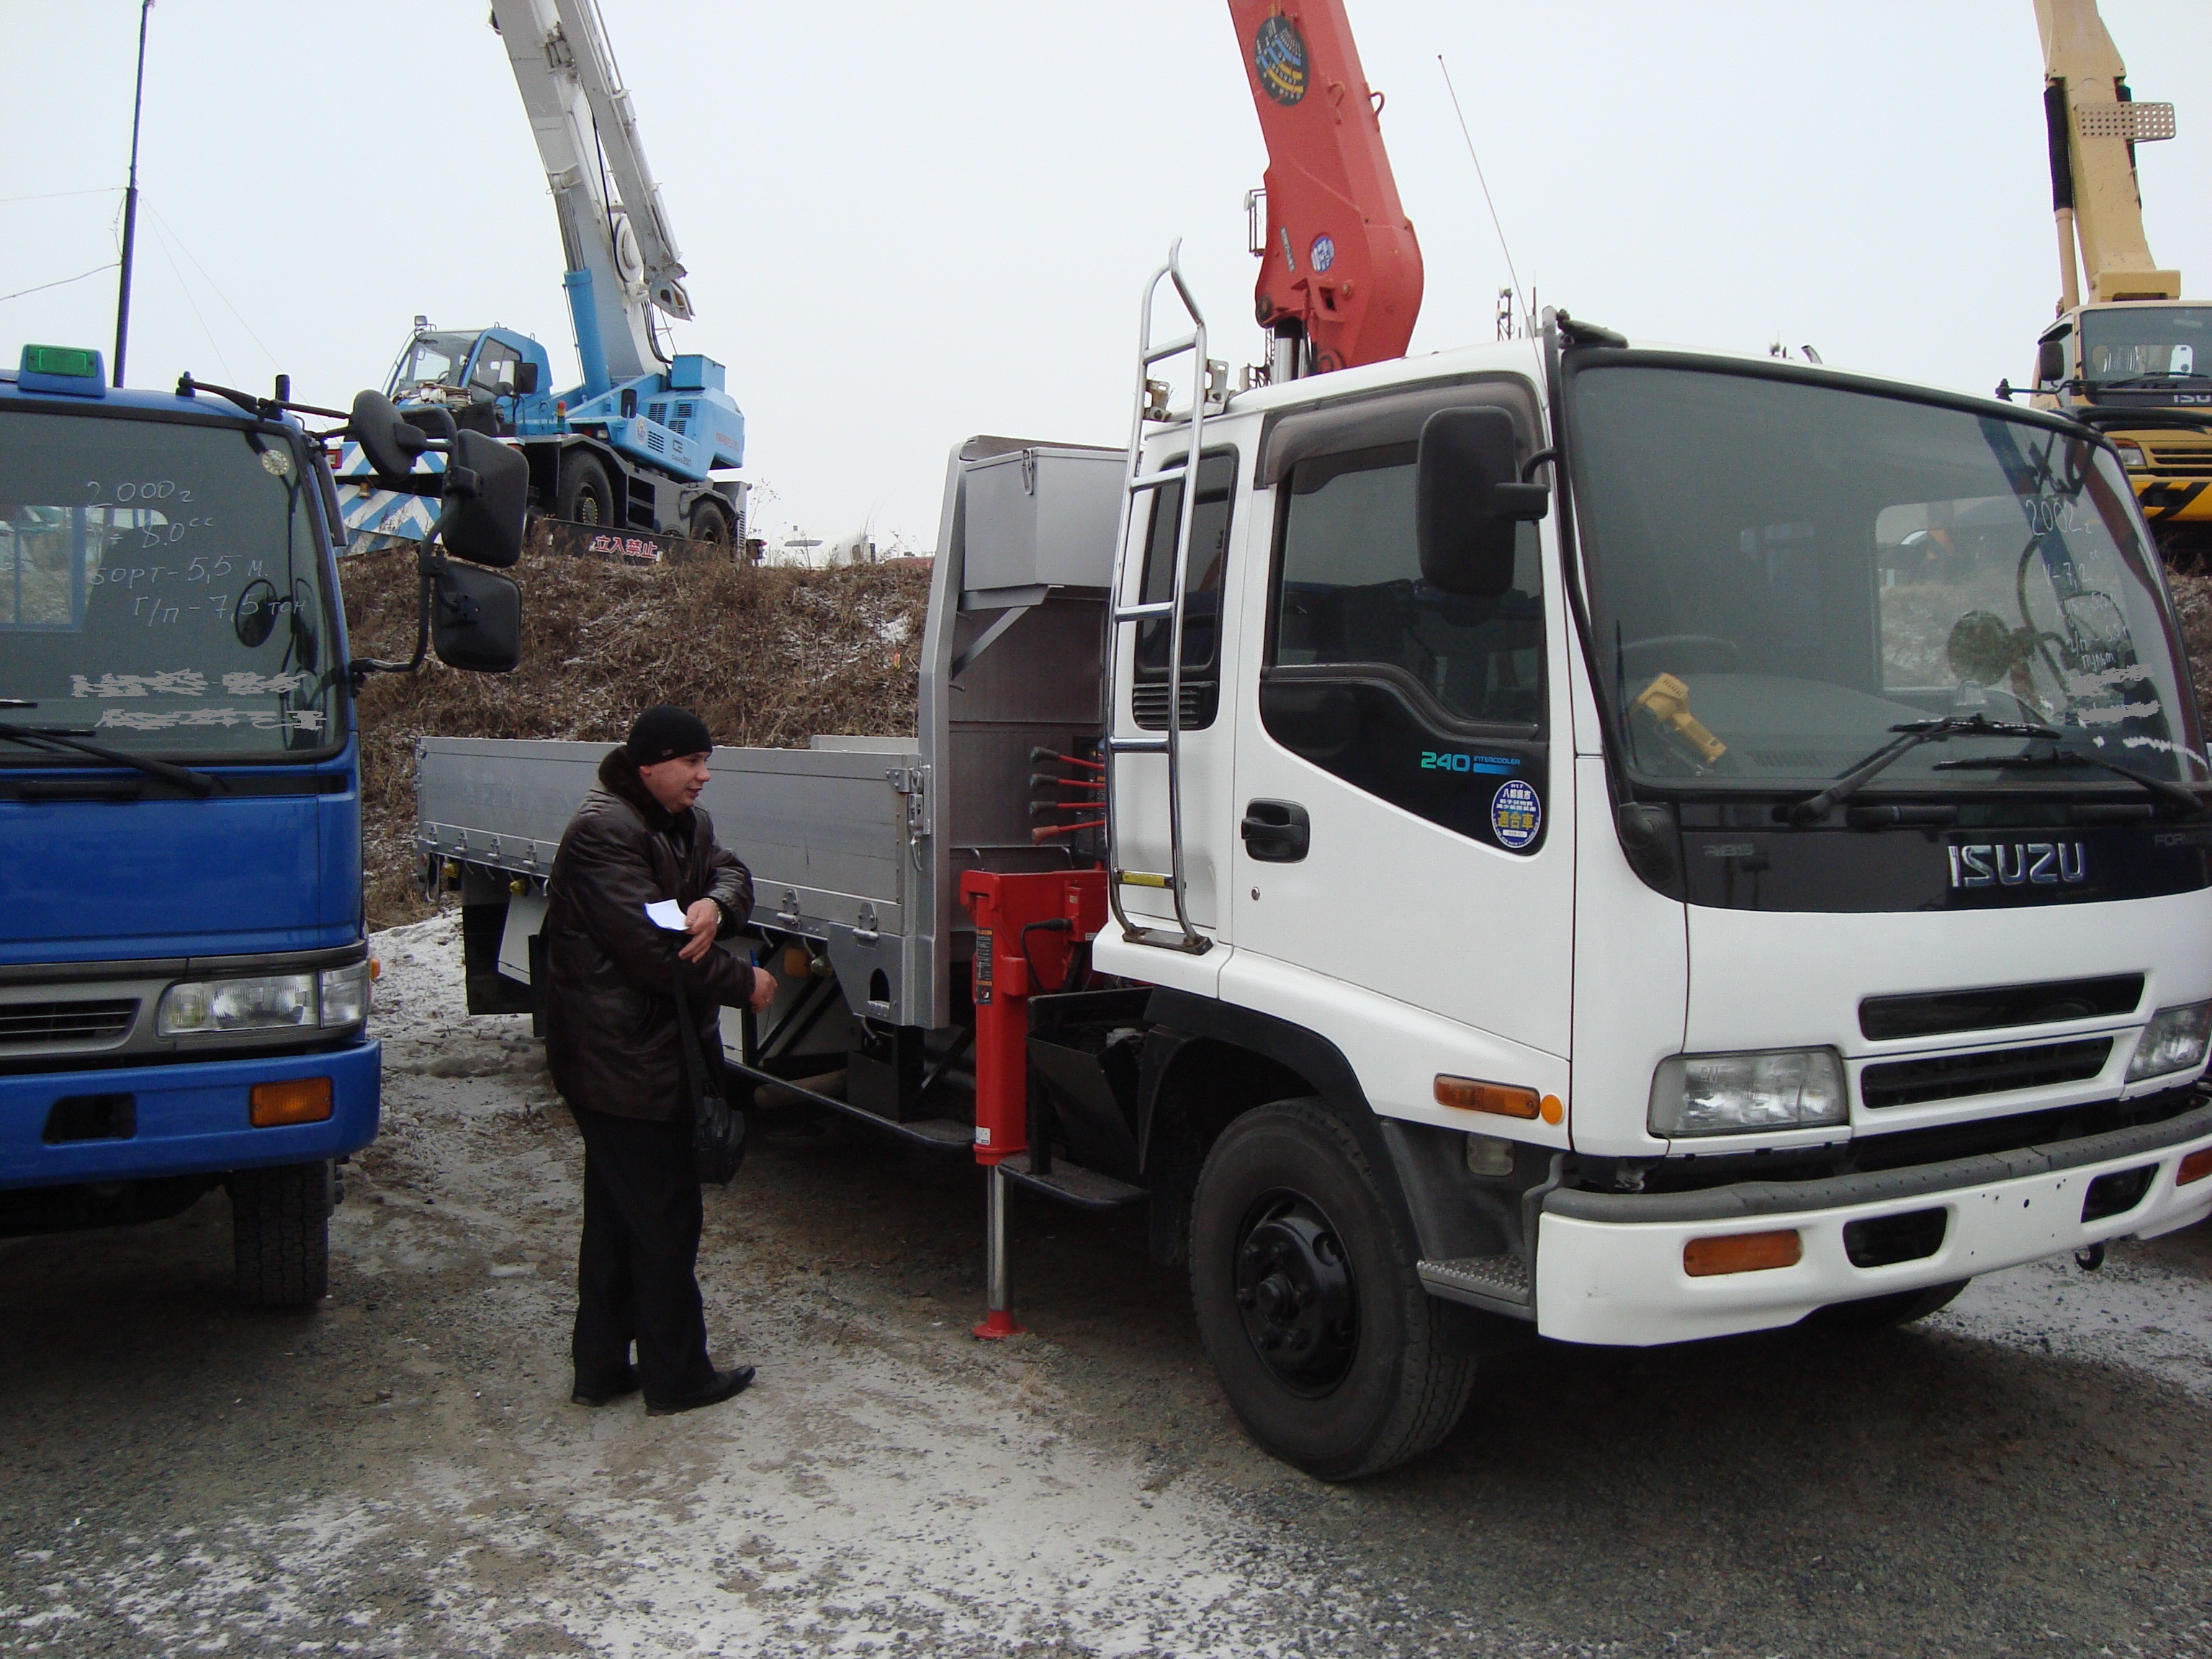 Isuzu FORWARD, 2002, грузовик с КМУ, самогруз.